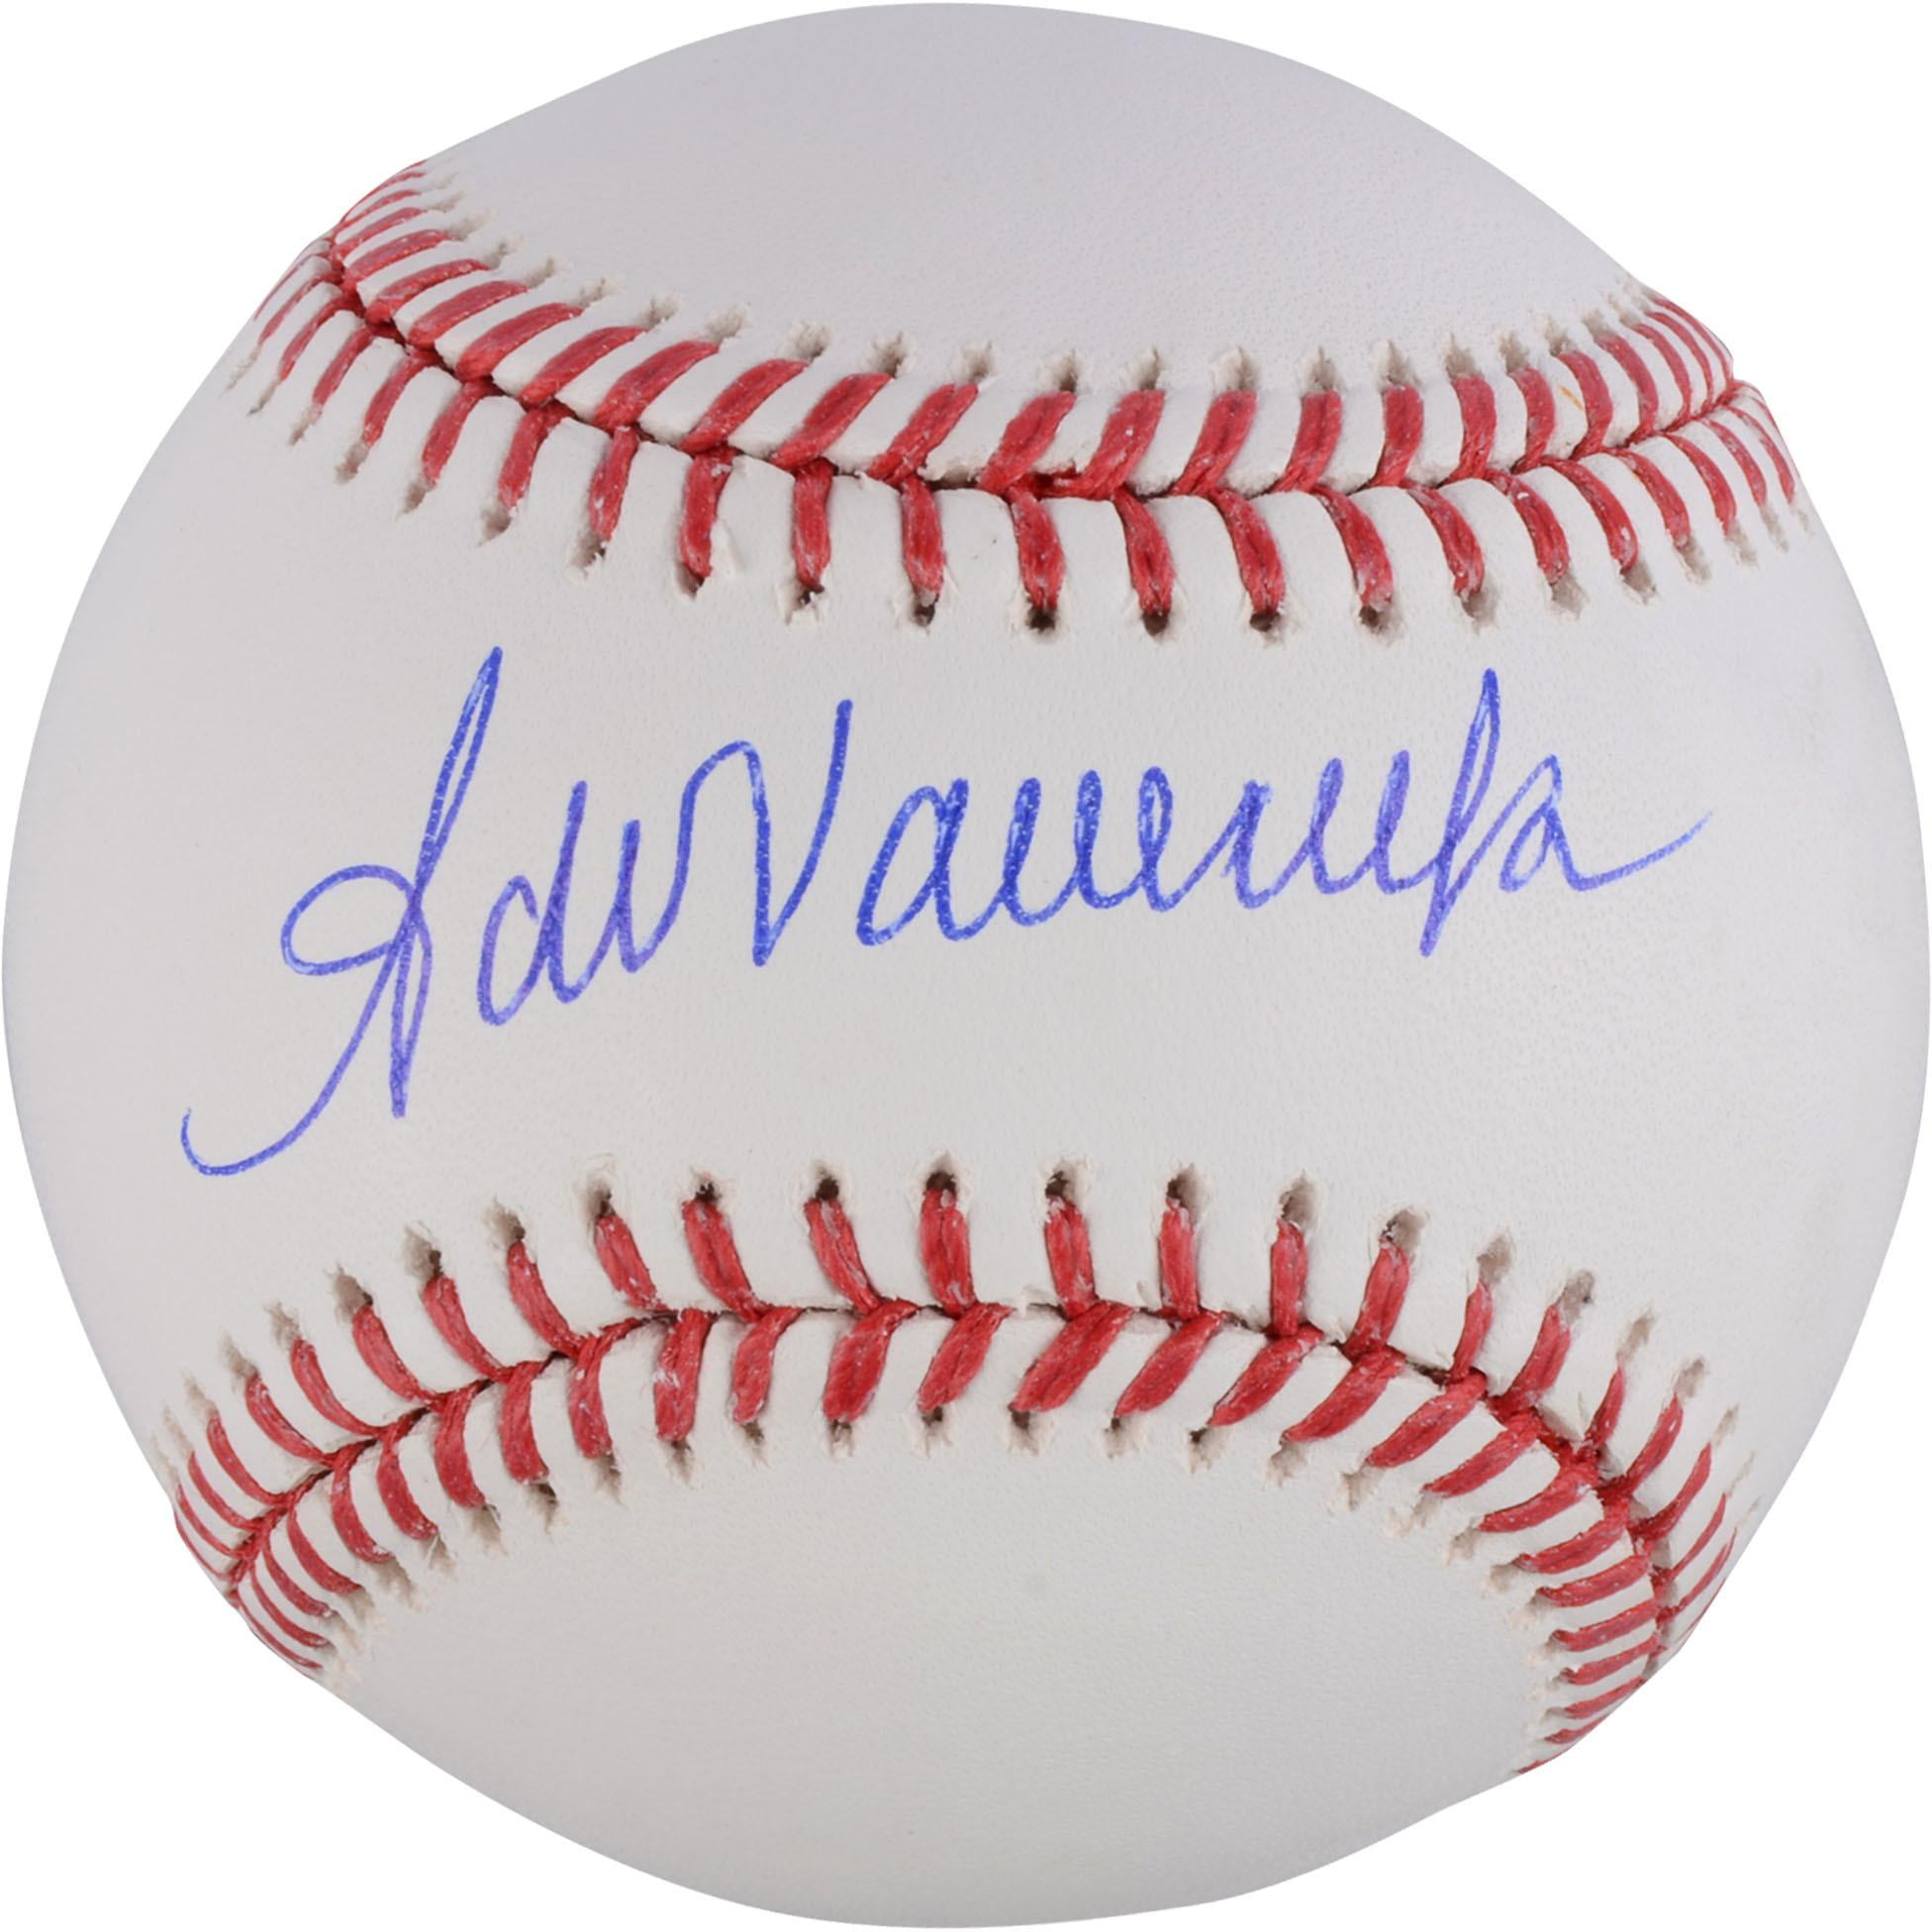 fernando valenzuela autographed baseball